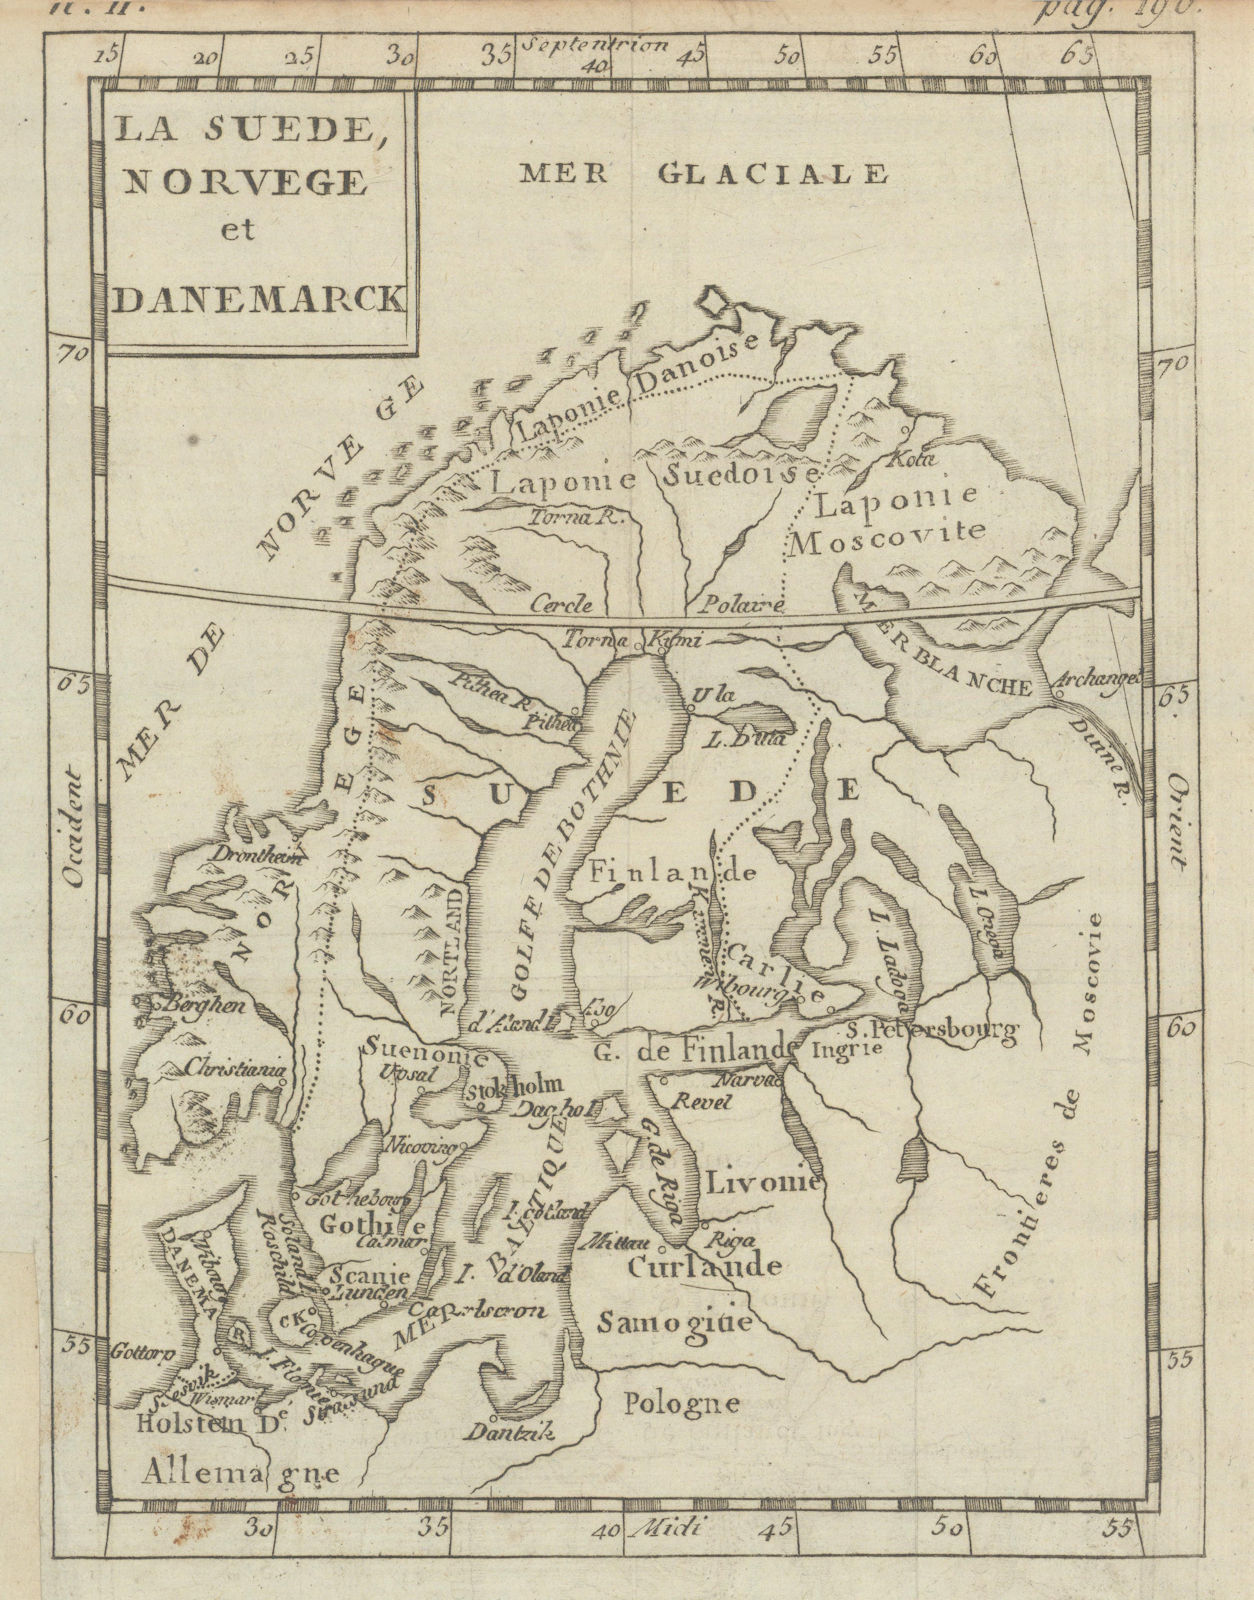 La Suede, Norvege et Danemarck. Scandinavia & Baltic regions. BUFFIER c1818 map